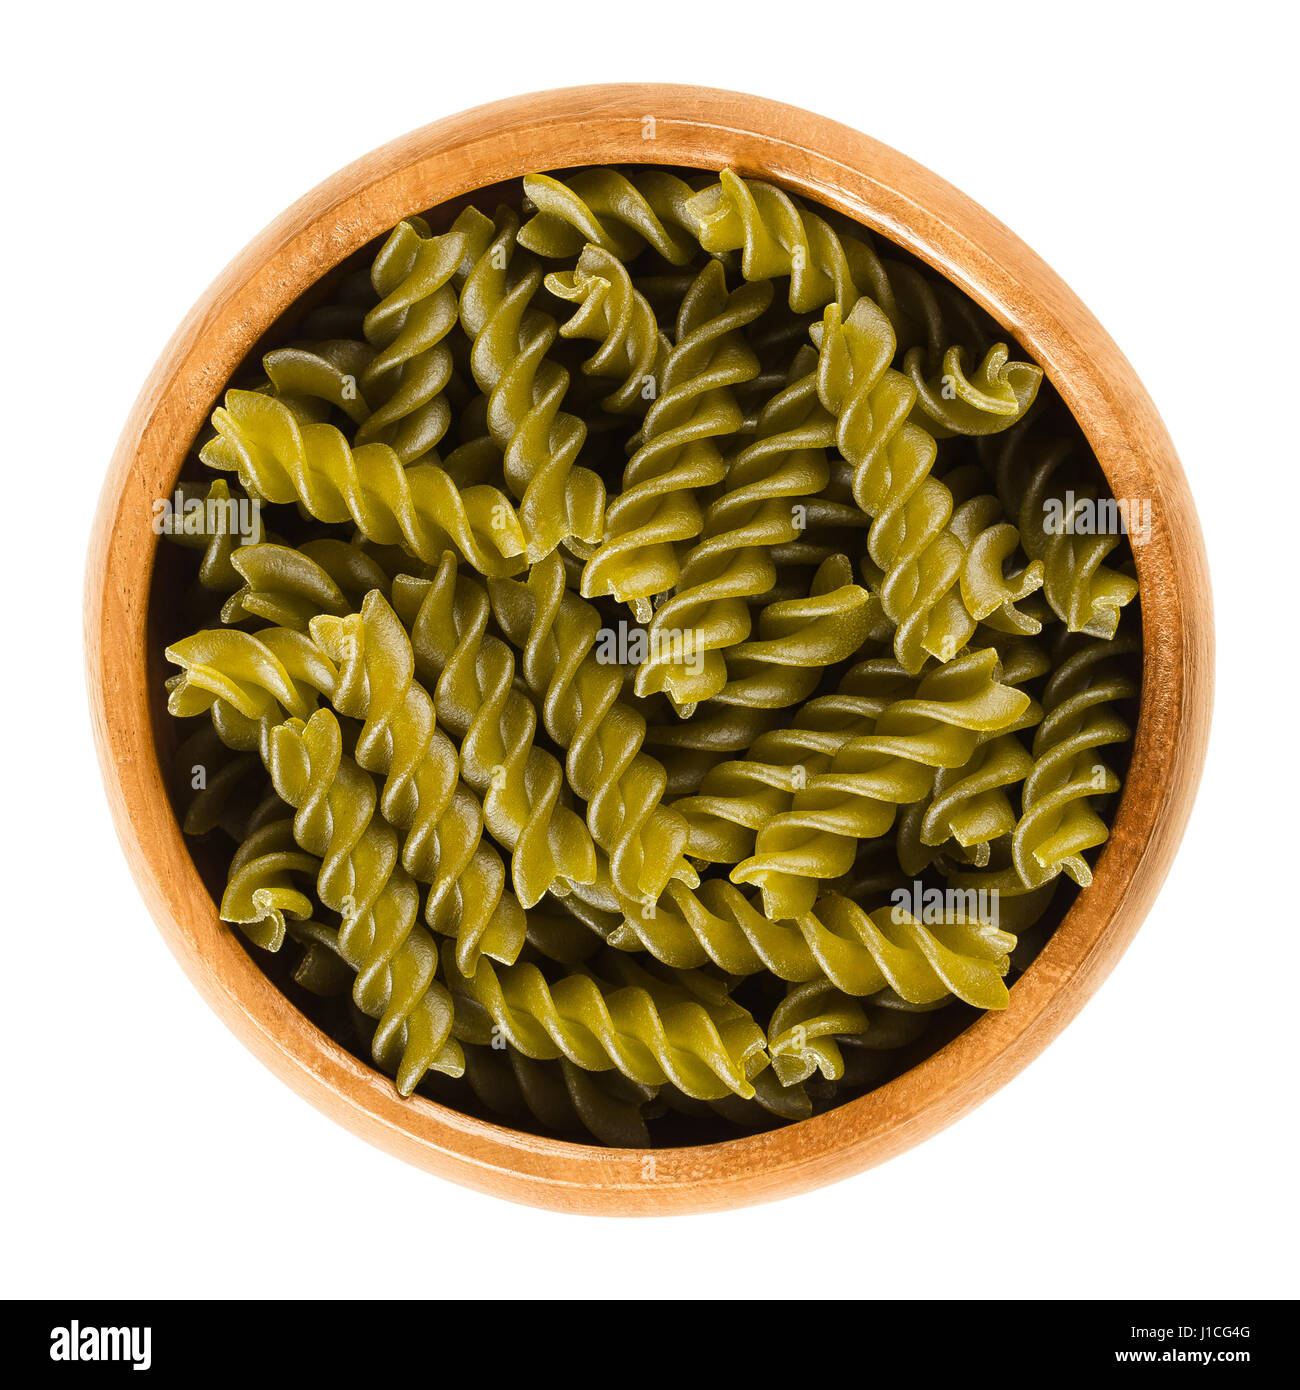 Green peas fusilli pasta in wooden bowl. Uncooked dried glutenfree noodles made from Pisum sativum flour. Short length corkscrew shaped pasta. Stock Photo